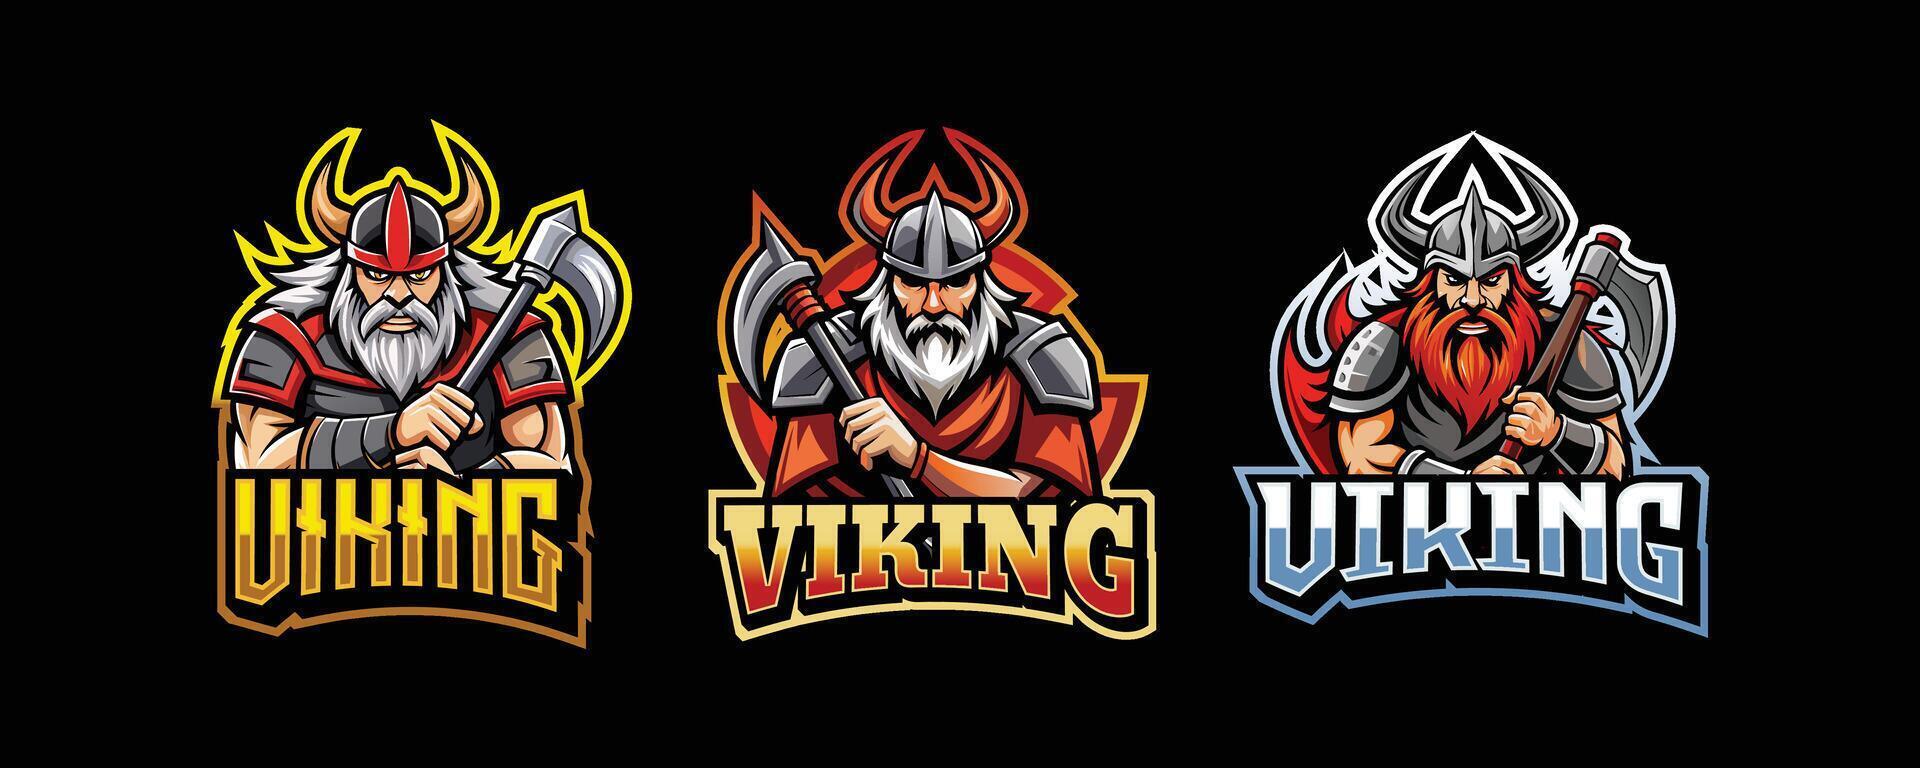 vikingo deporte juego de azar logo. conjunto de vikingo mascota diseño vector